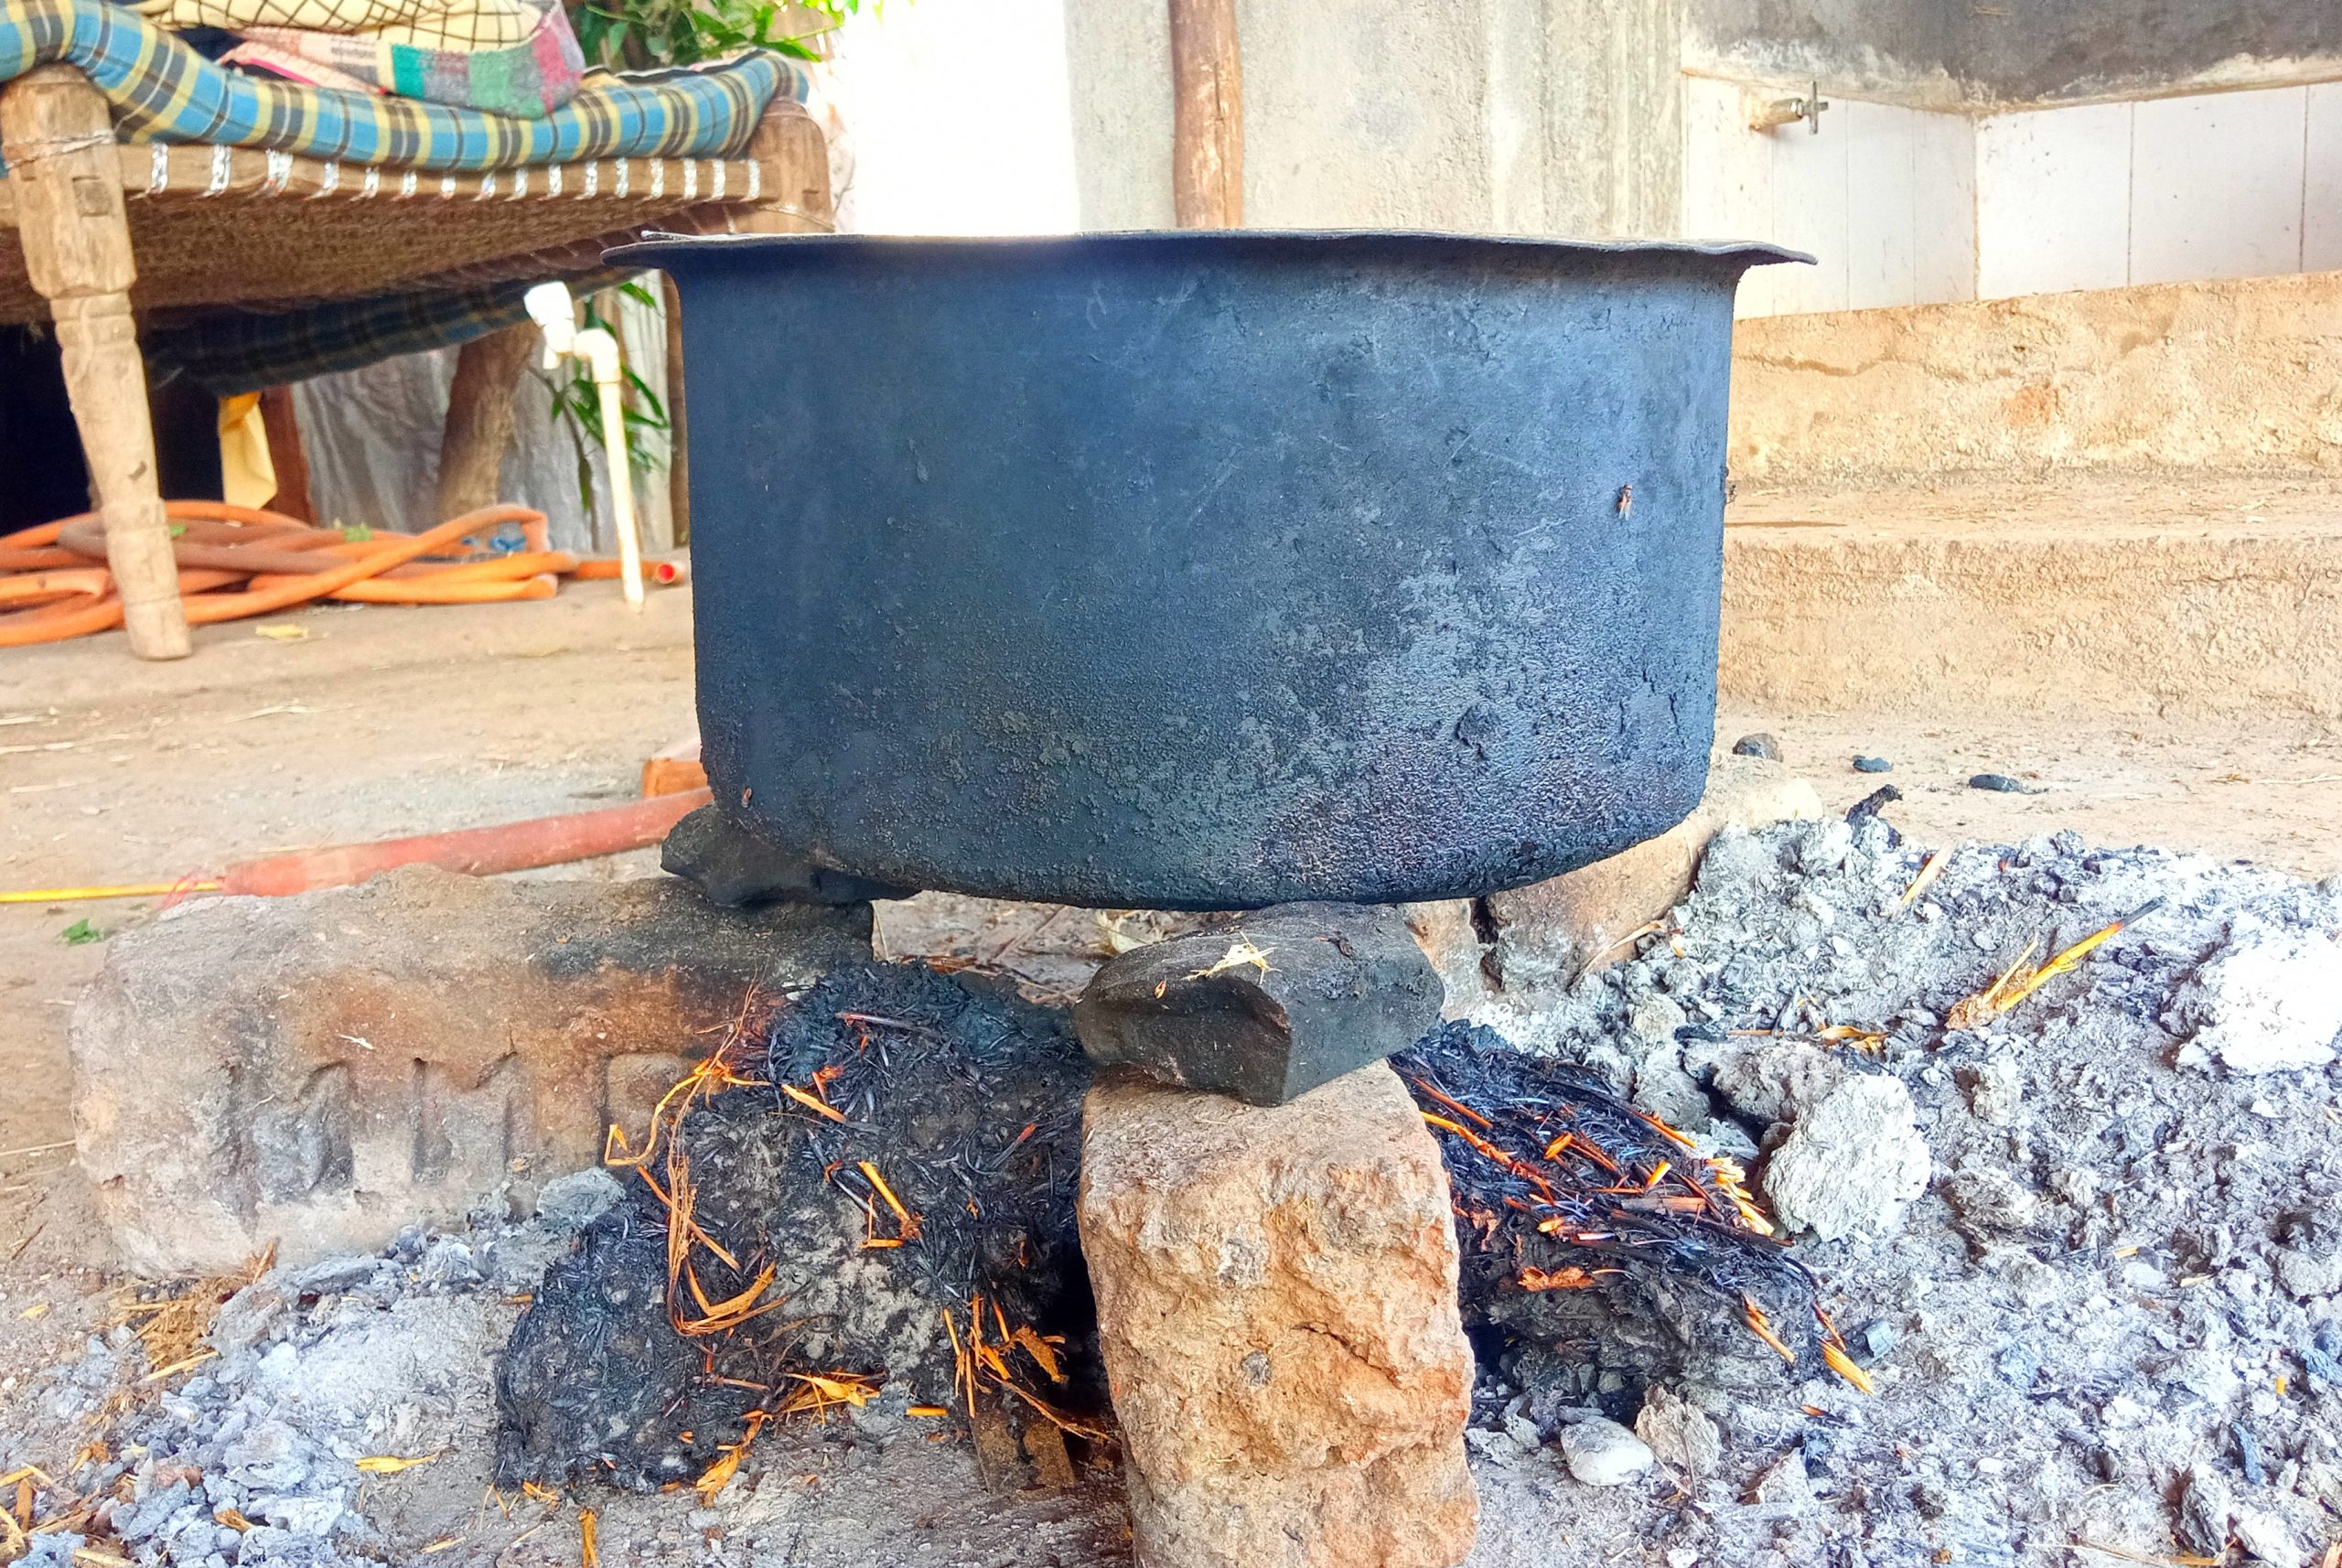 A water pot on bricks stove